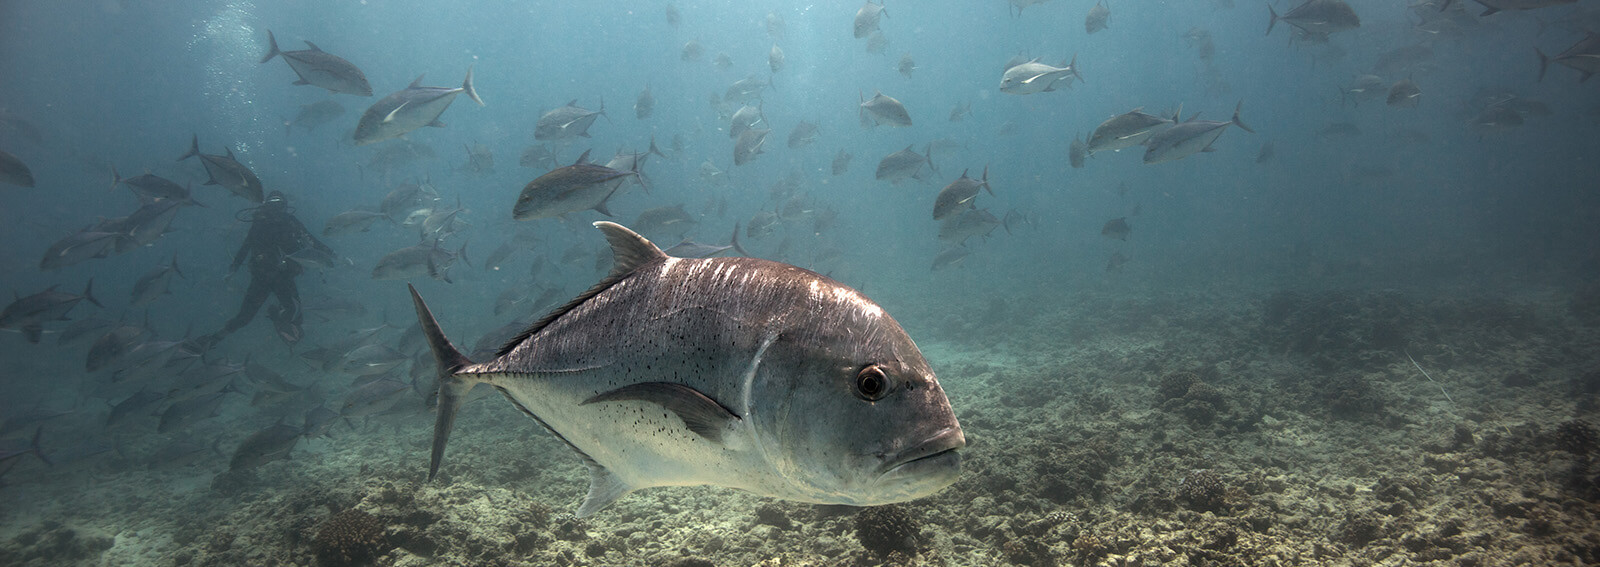 Many gray fish swim in shallow water